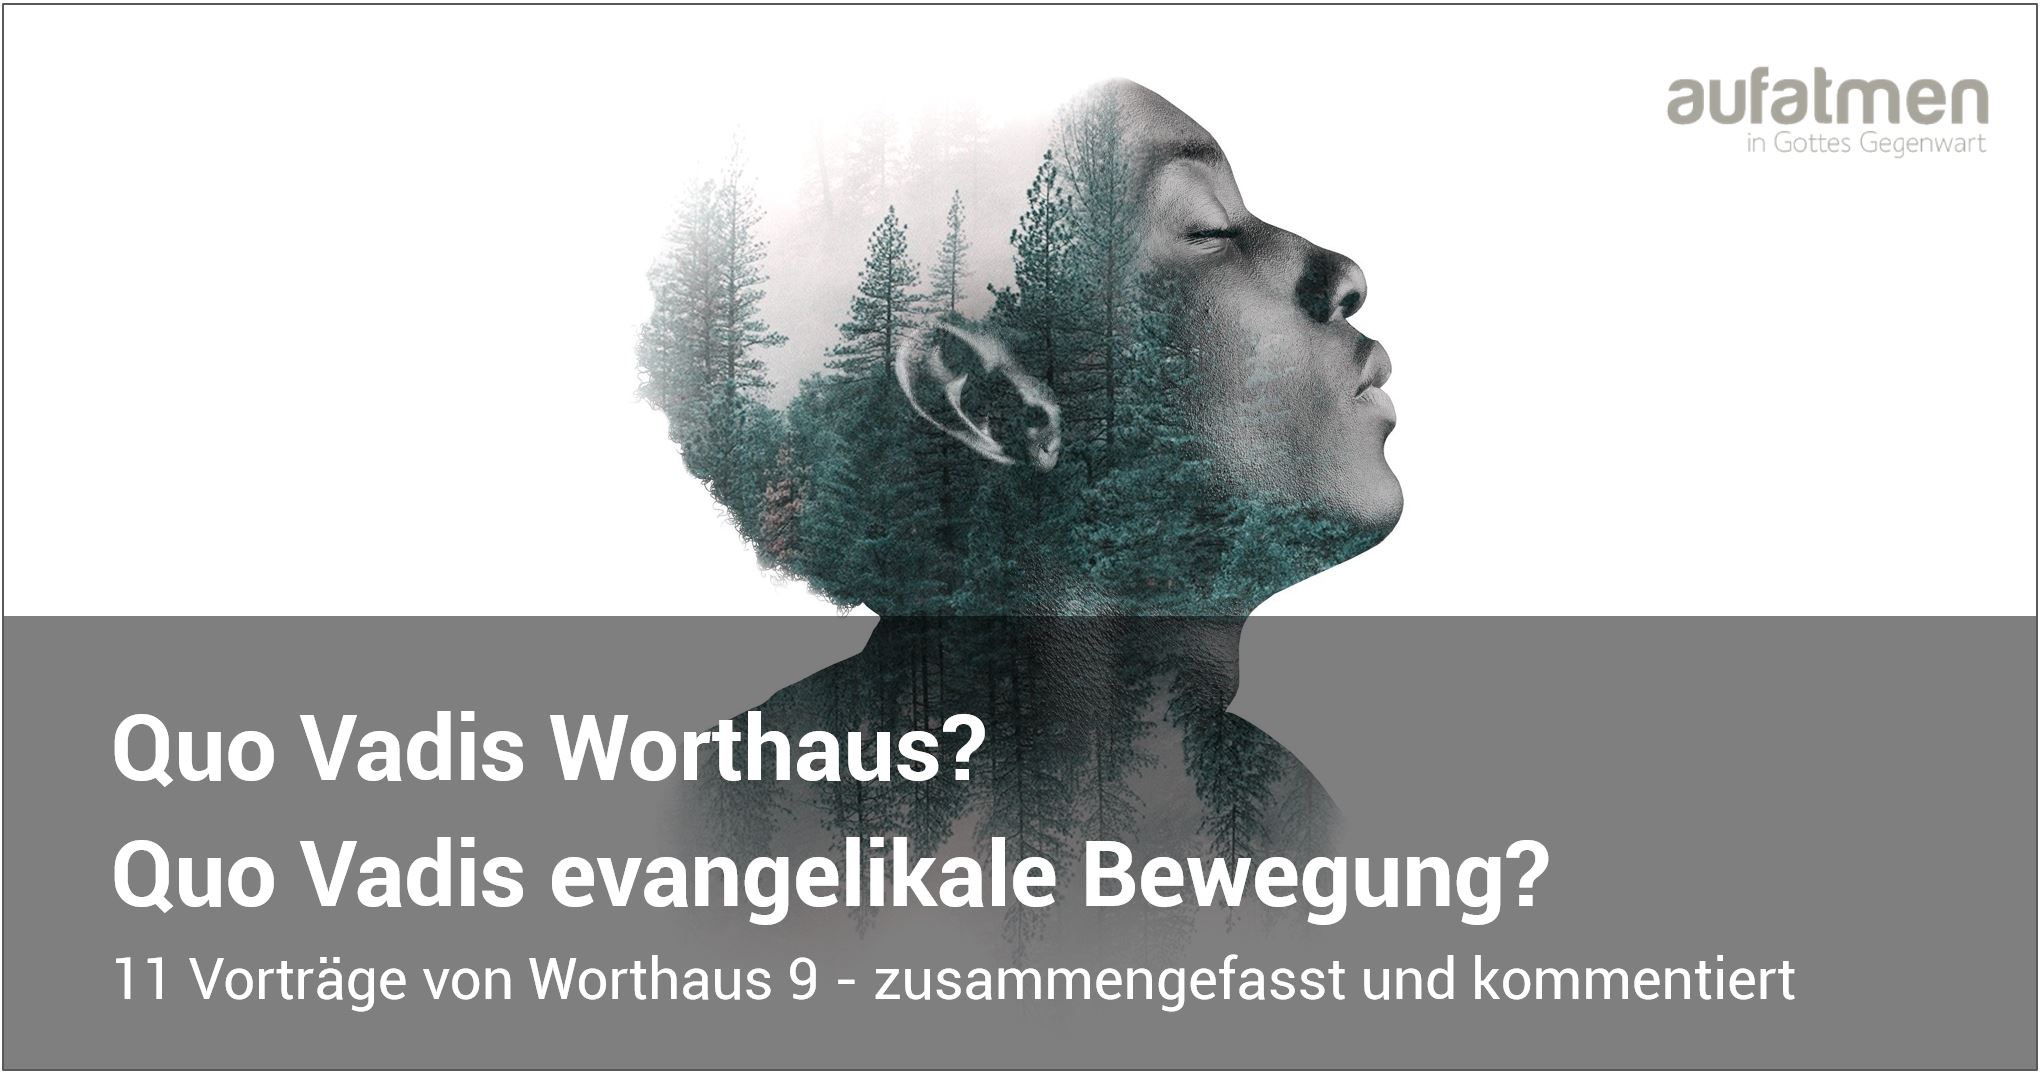 Quo vadis Worthaus? Quo vadis evangelikale Bewegung?